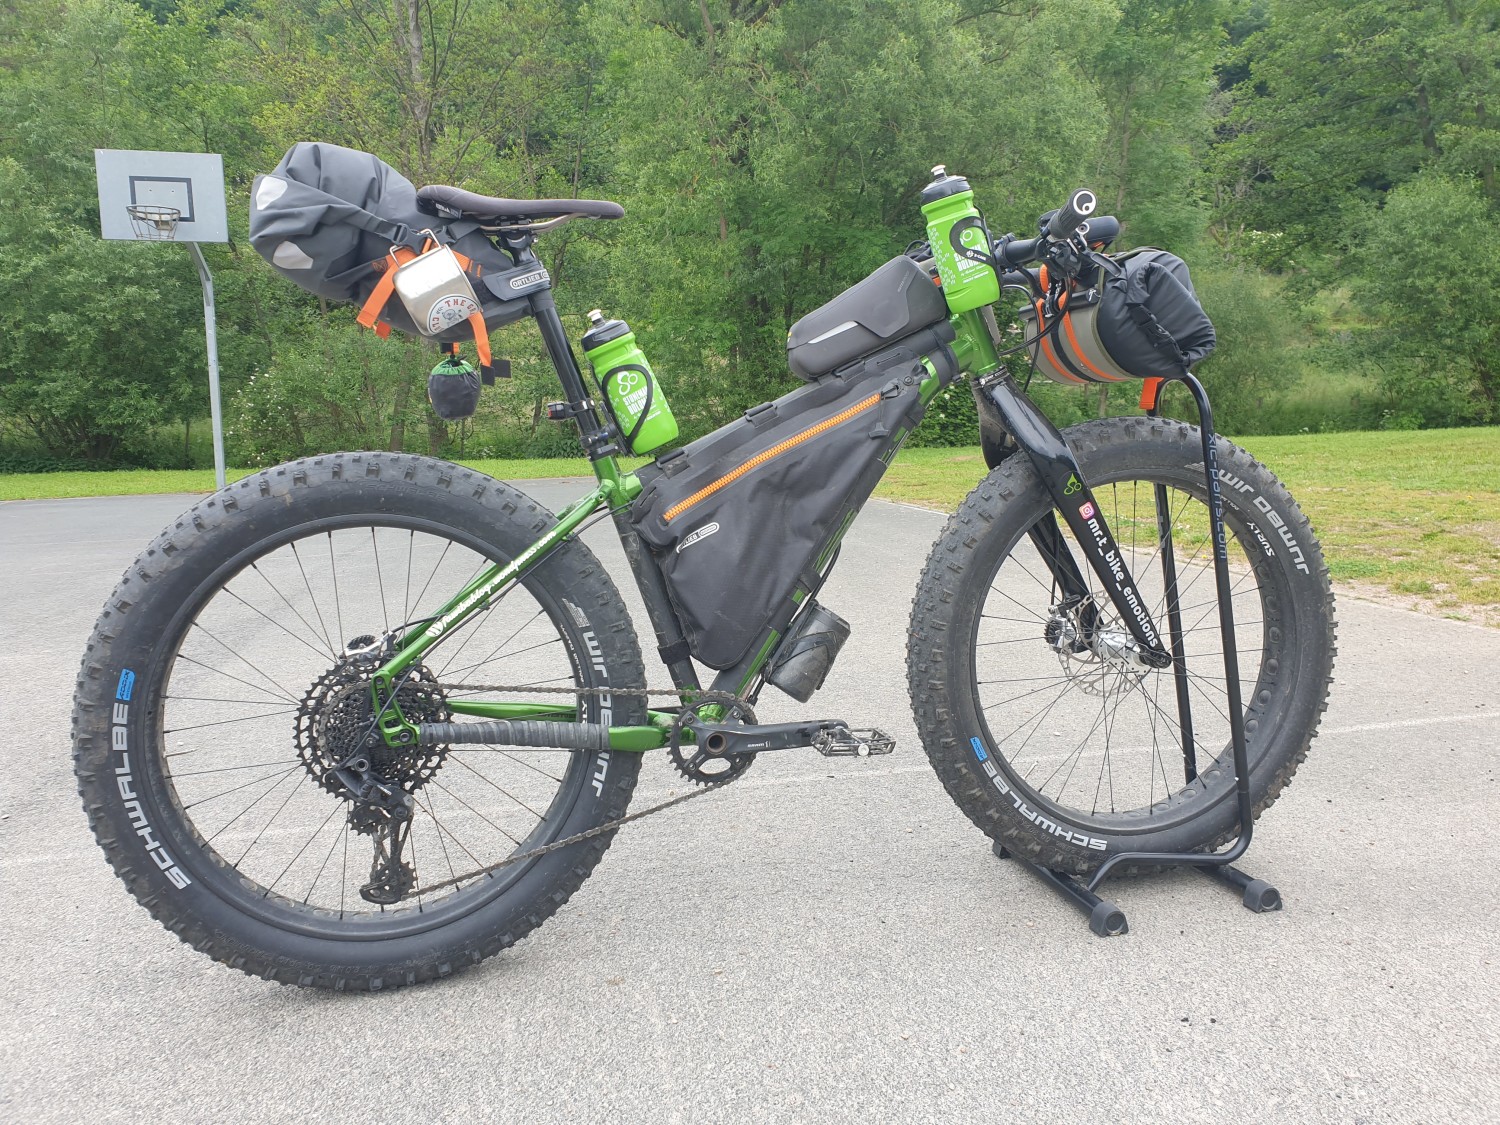 775 disc brakes, a €12,000 super bike and mid-century modern bikepacking  bags - BikeRadar